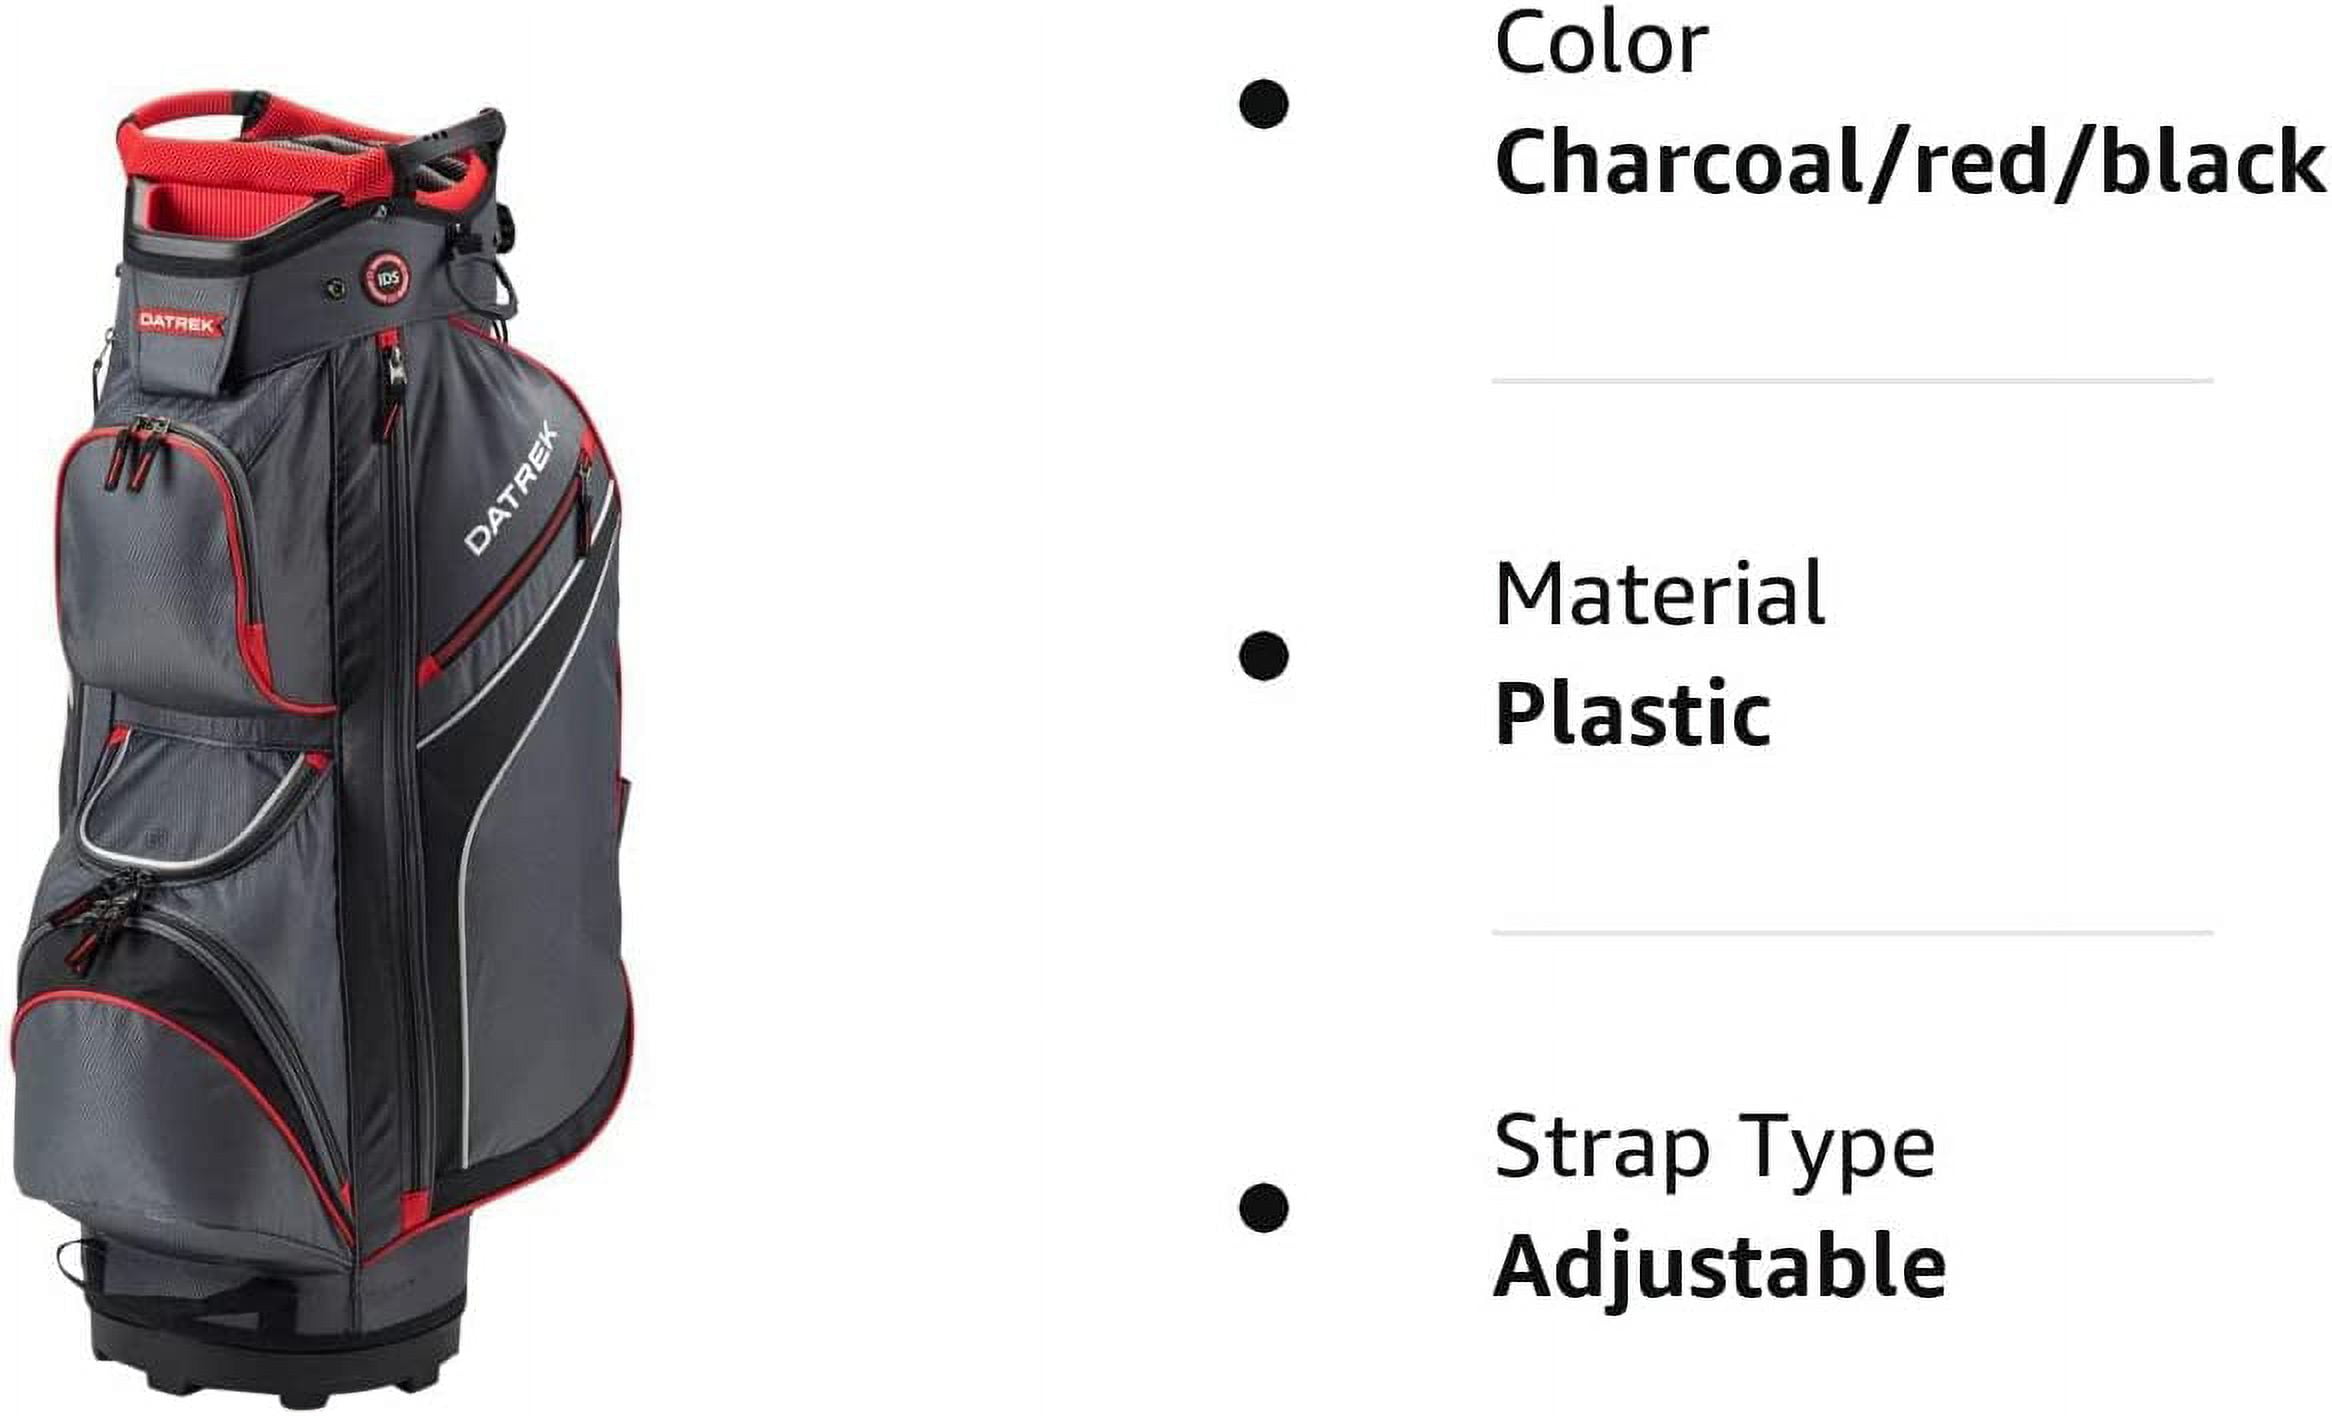 Datrek DG Lite II Cart Bag – Dynamic Brands